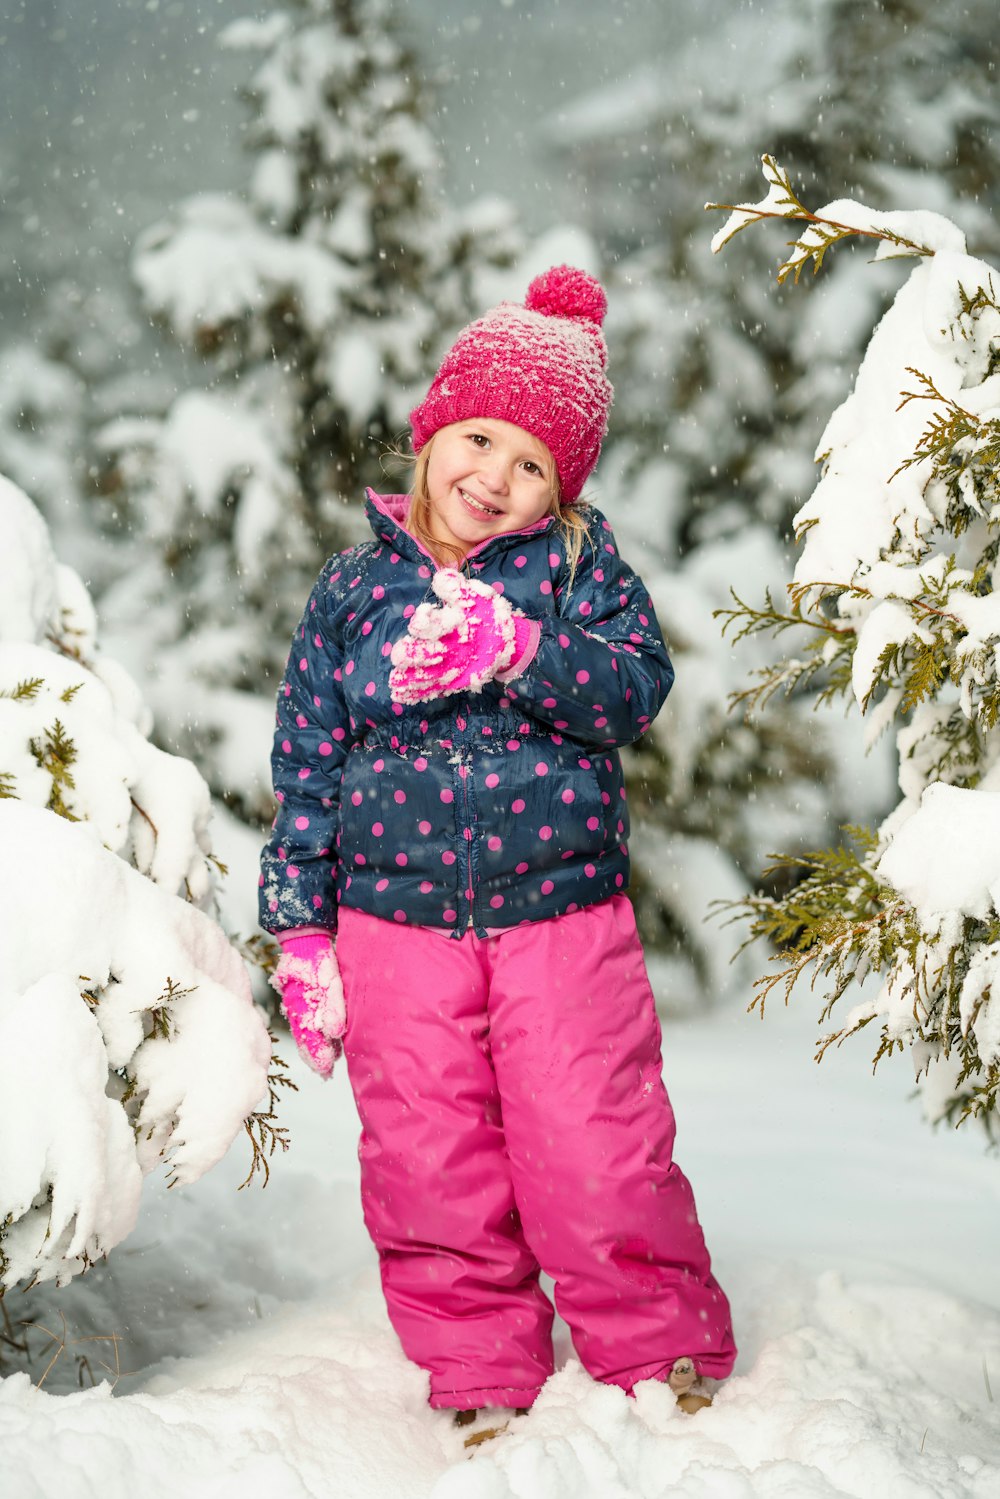 menina em pé na neve branca enquanto sorri perto de árvores cobertas de neve